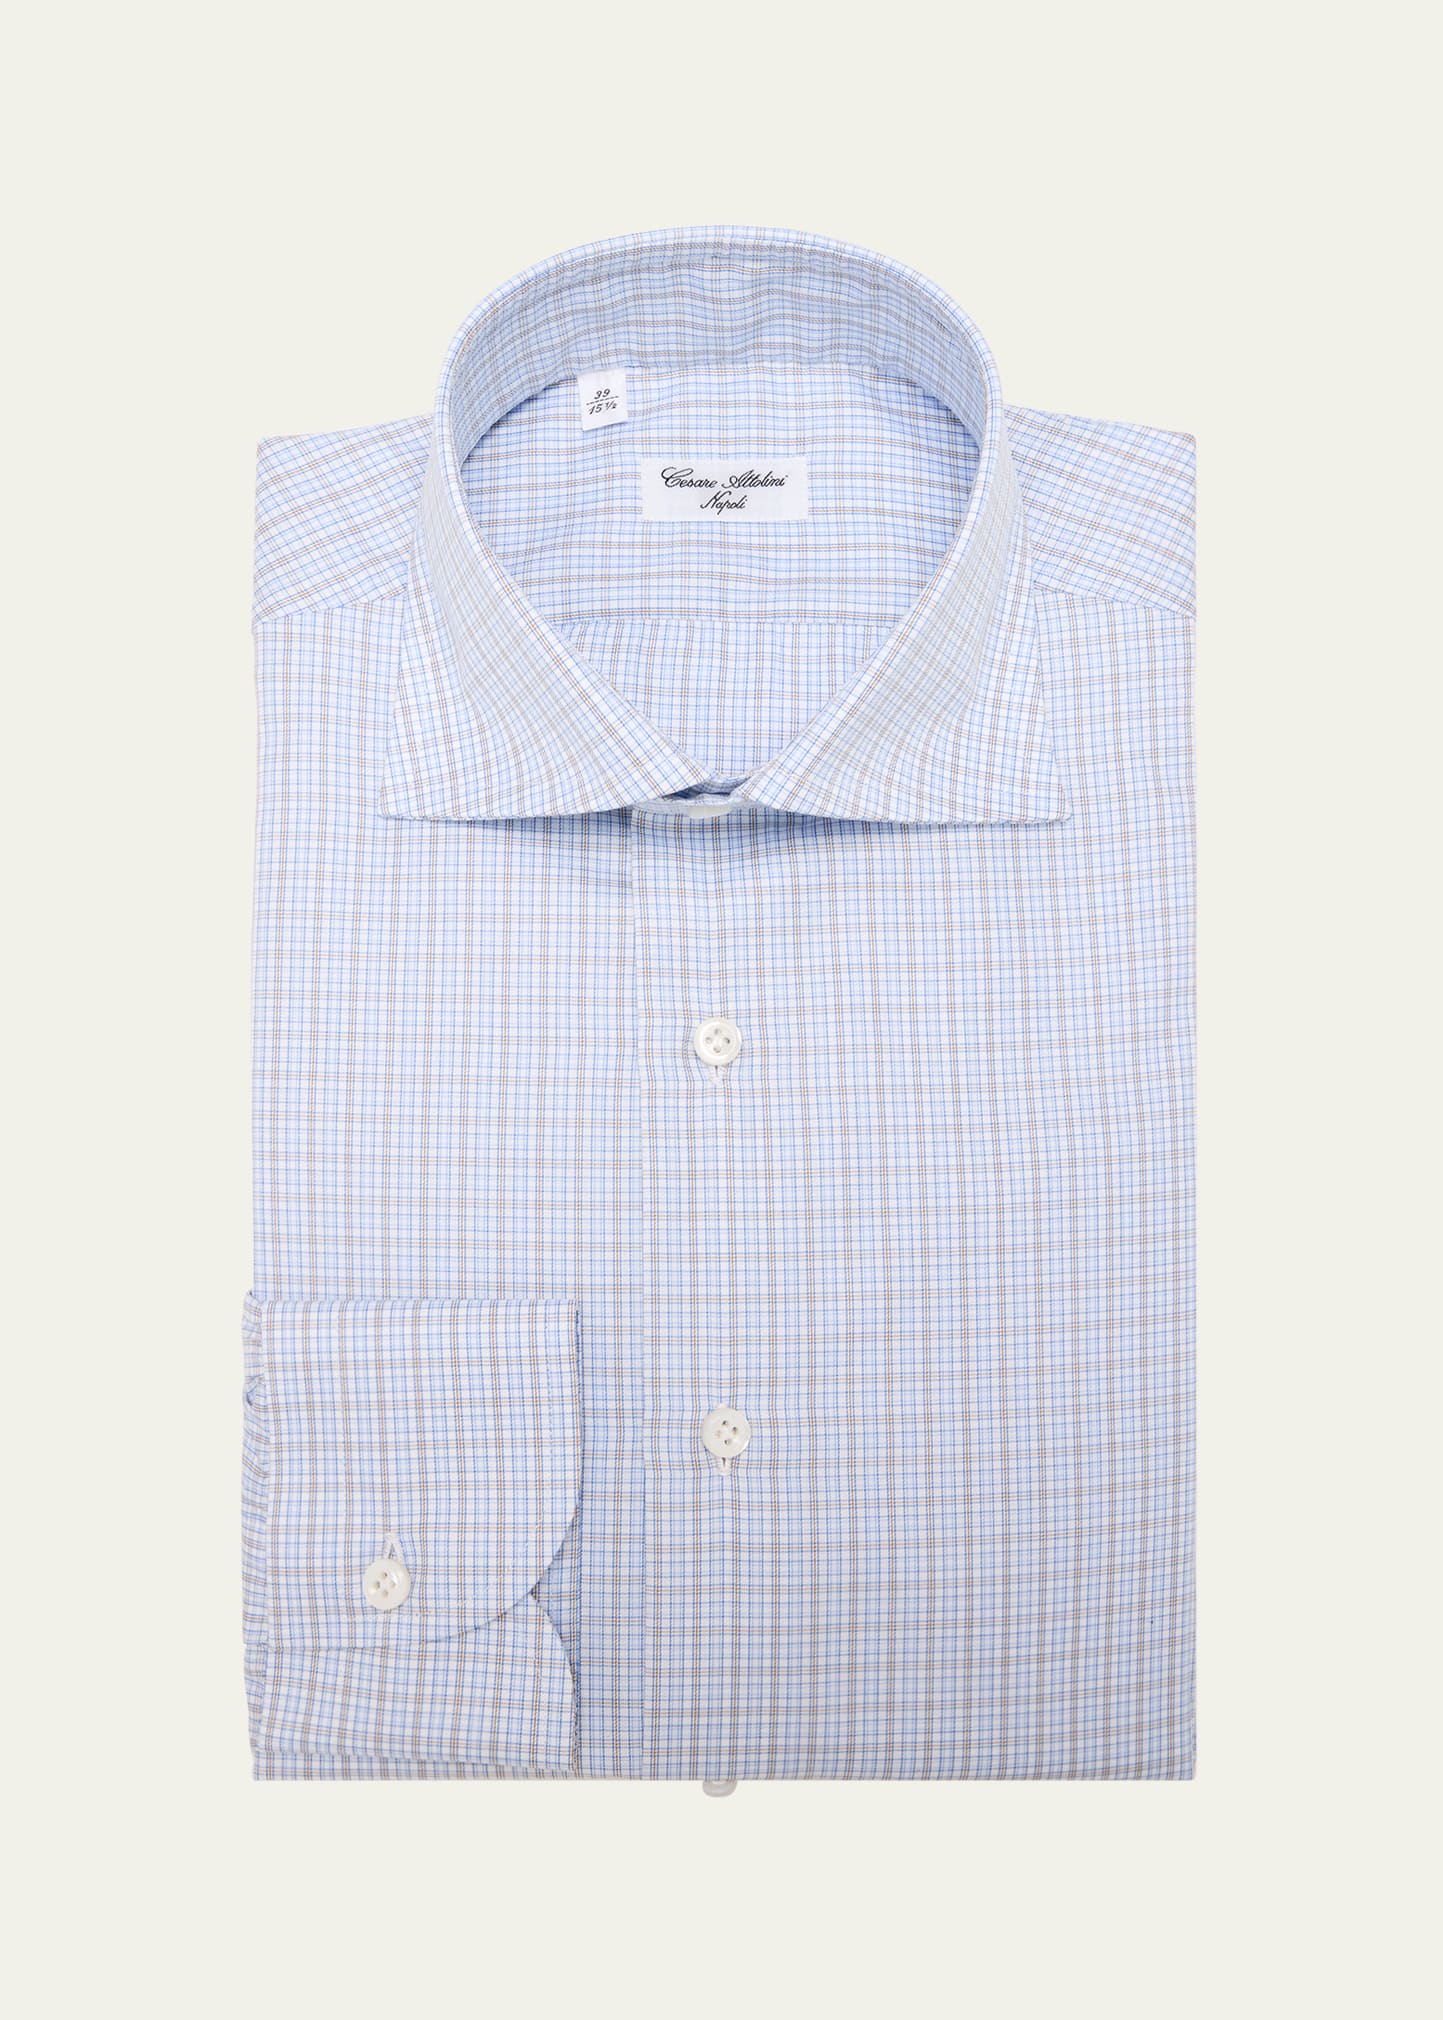 Men's Cotton Graph Check Dress Shirt